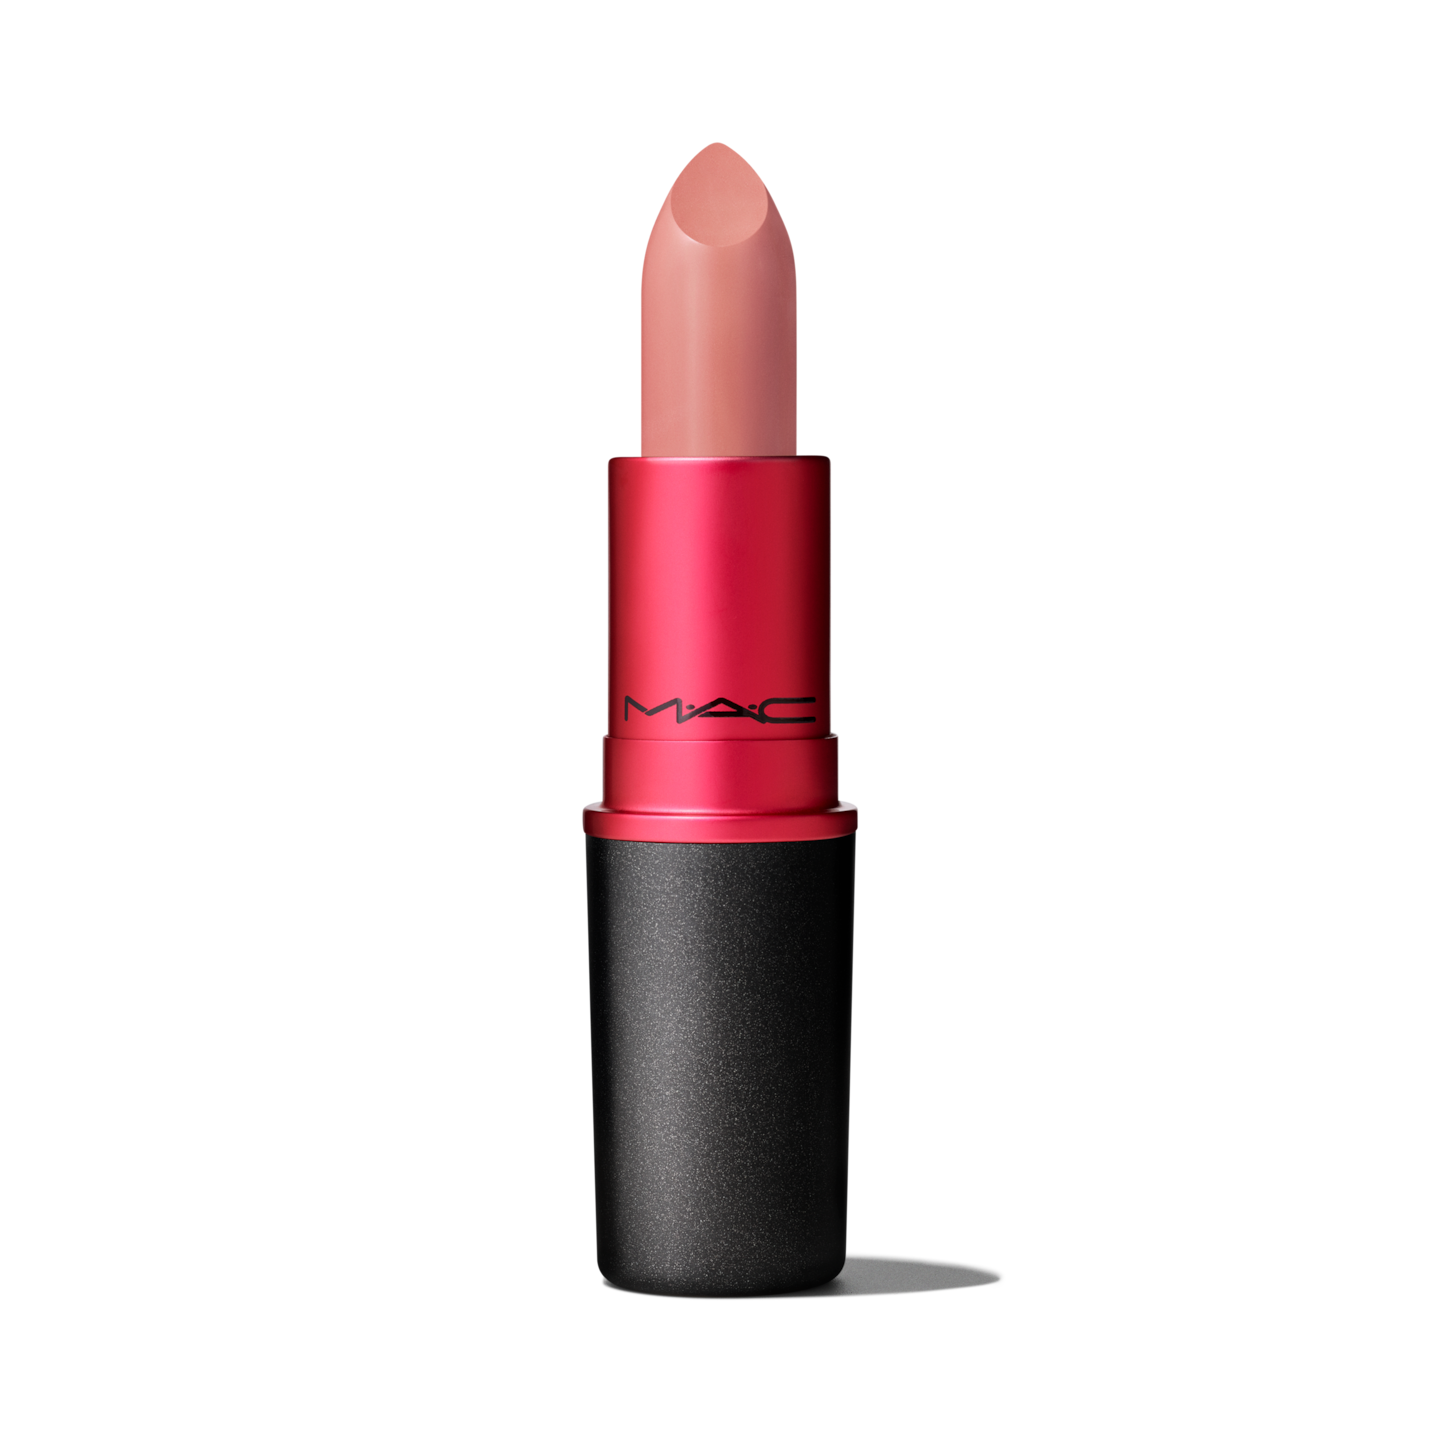 Viva Glam Lipstick | Mac Cosmetics - Official Site | Mac Cosmetics -  Official Site